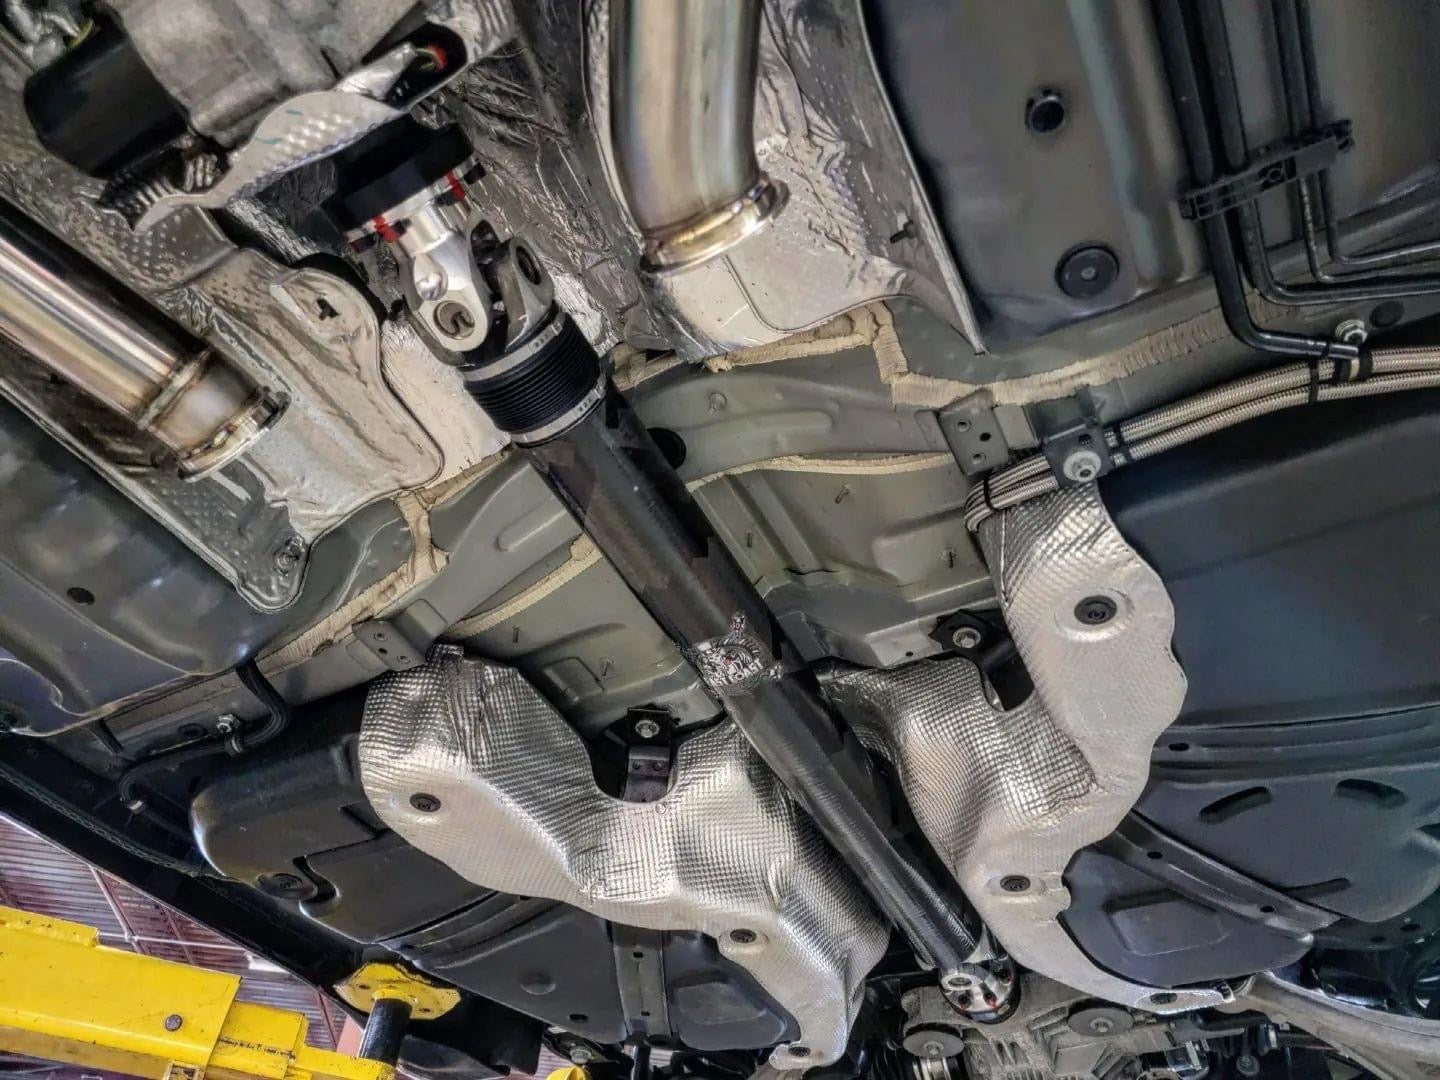 2021+ Dodge Durango 5.7L & 6.4L V8 SRT, SRT392, R/T, R/T Plus, Citadel, and Pursuit HD Carbon Fiber 1 Piece Driveshaft. Rating: 5901 FT/LBS x 9809 RPM